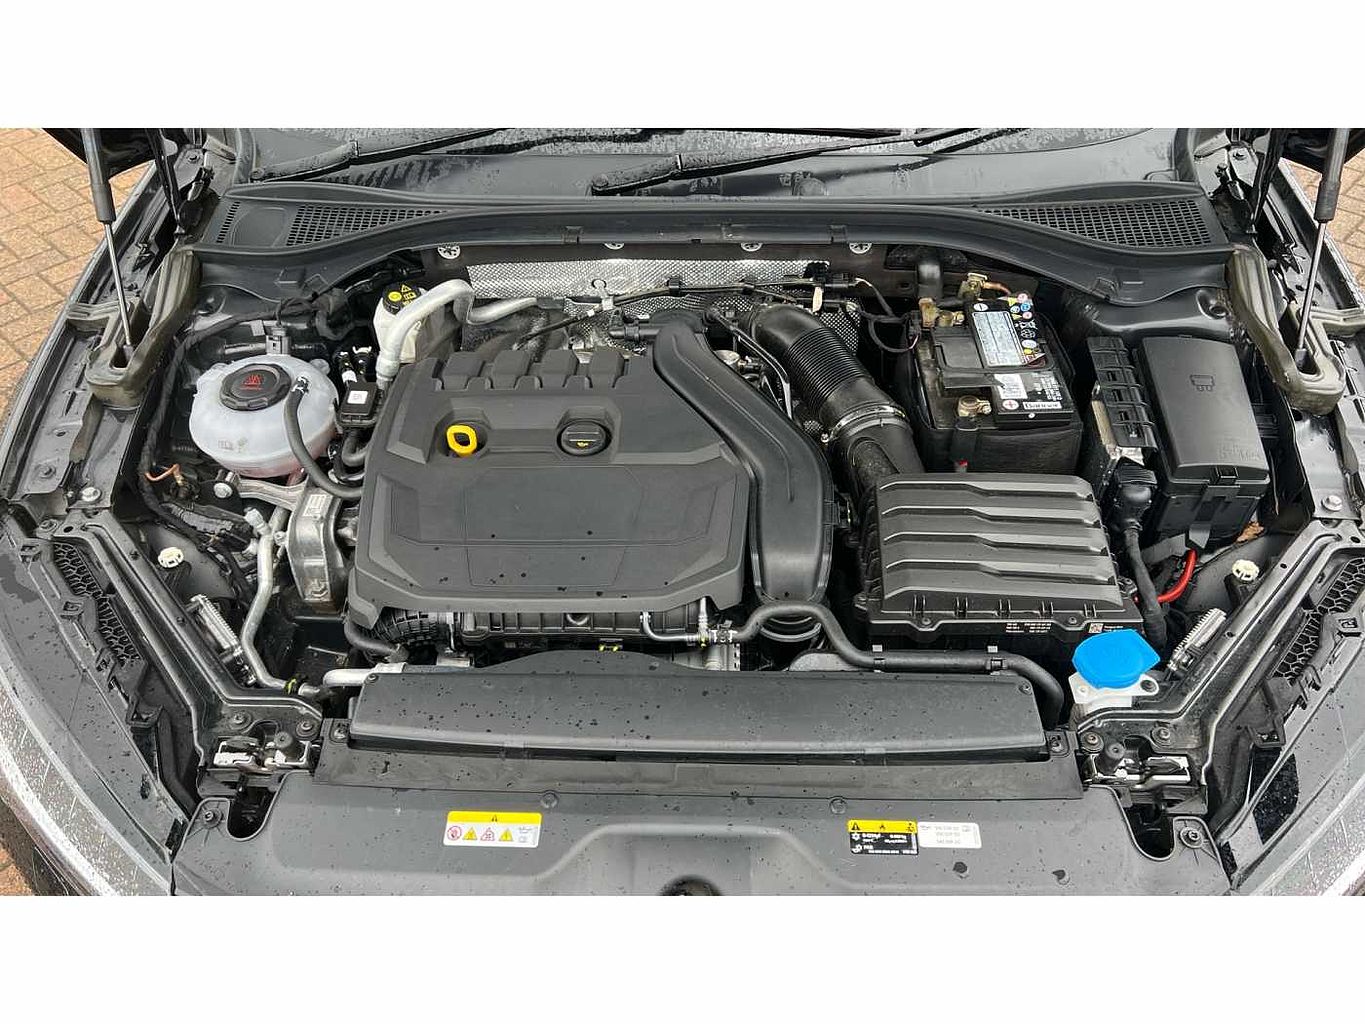 SKODA Superb 1.5 TSI 150ps SportLine Plus ACT DSG Hatch